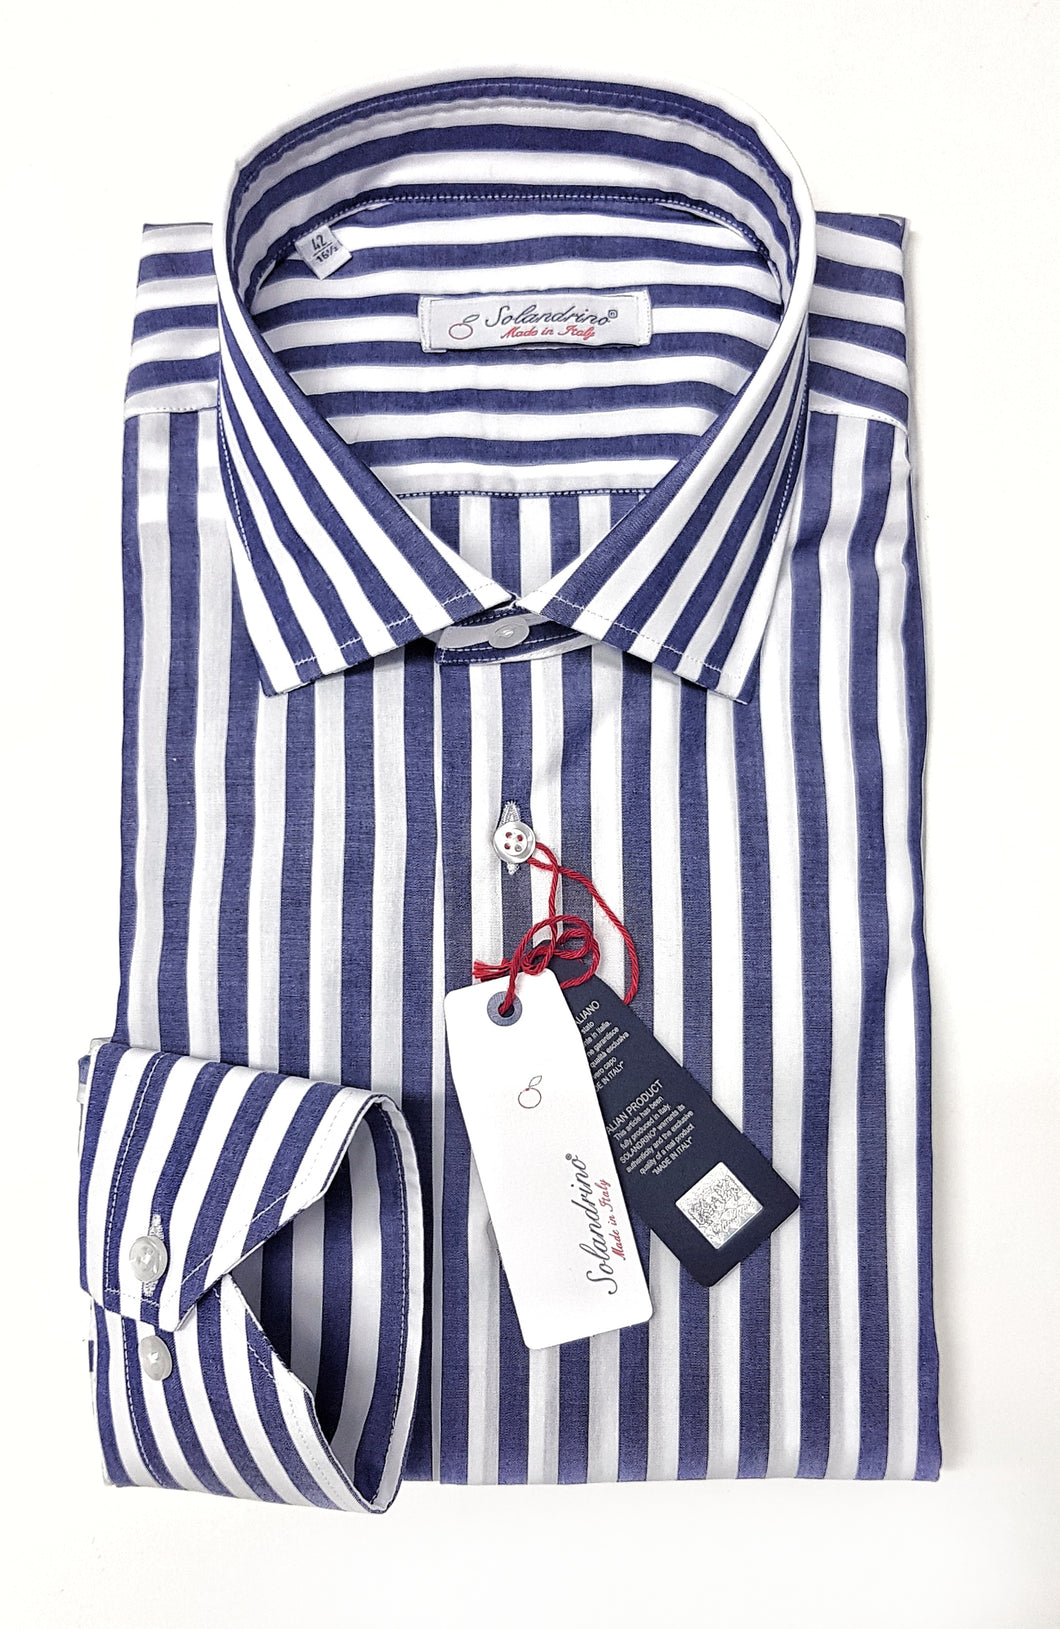 Camicia Uomo fasciato blu puro cotone made in Italy man shirt stripe navy